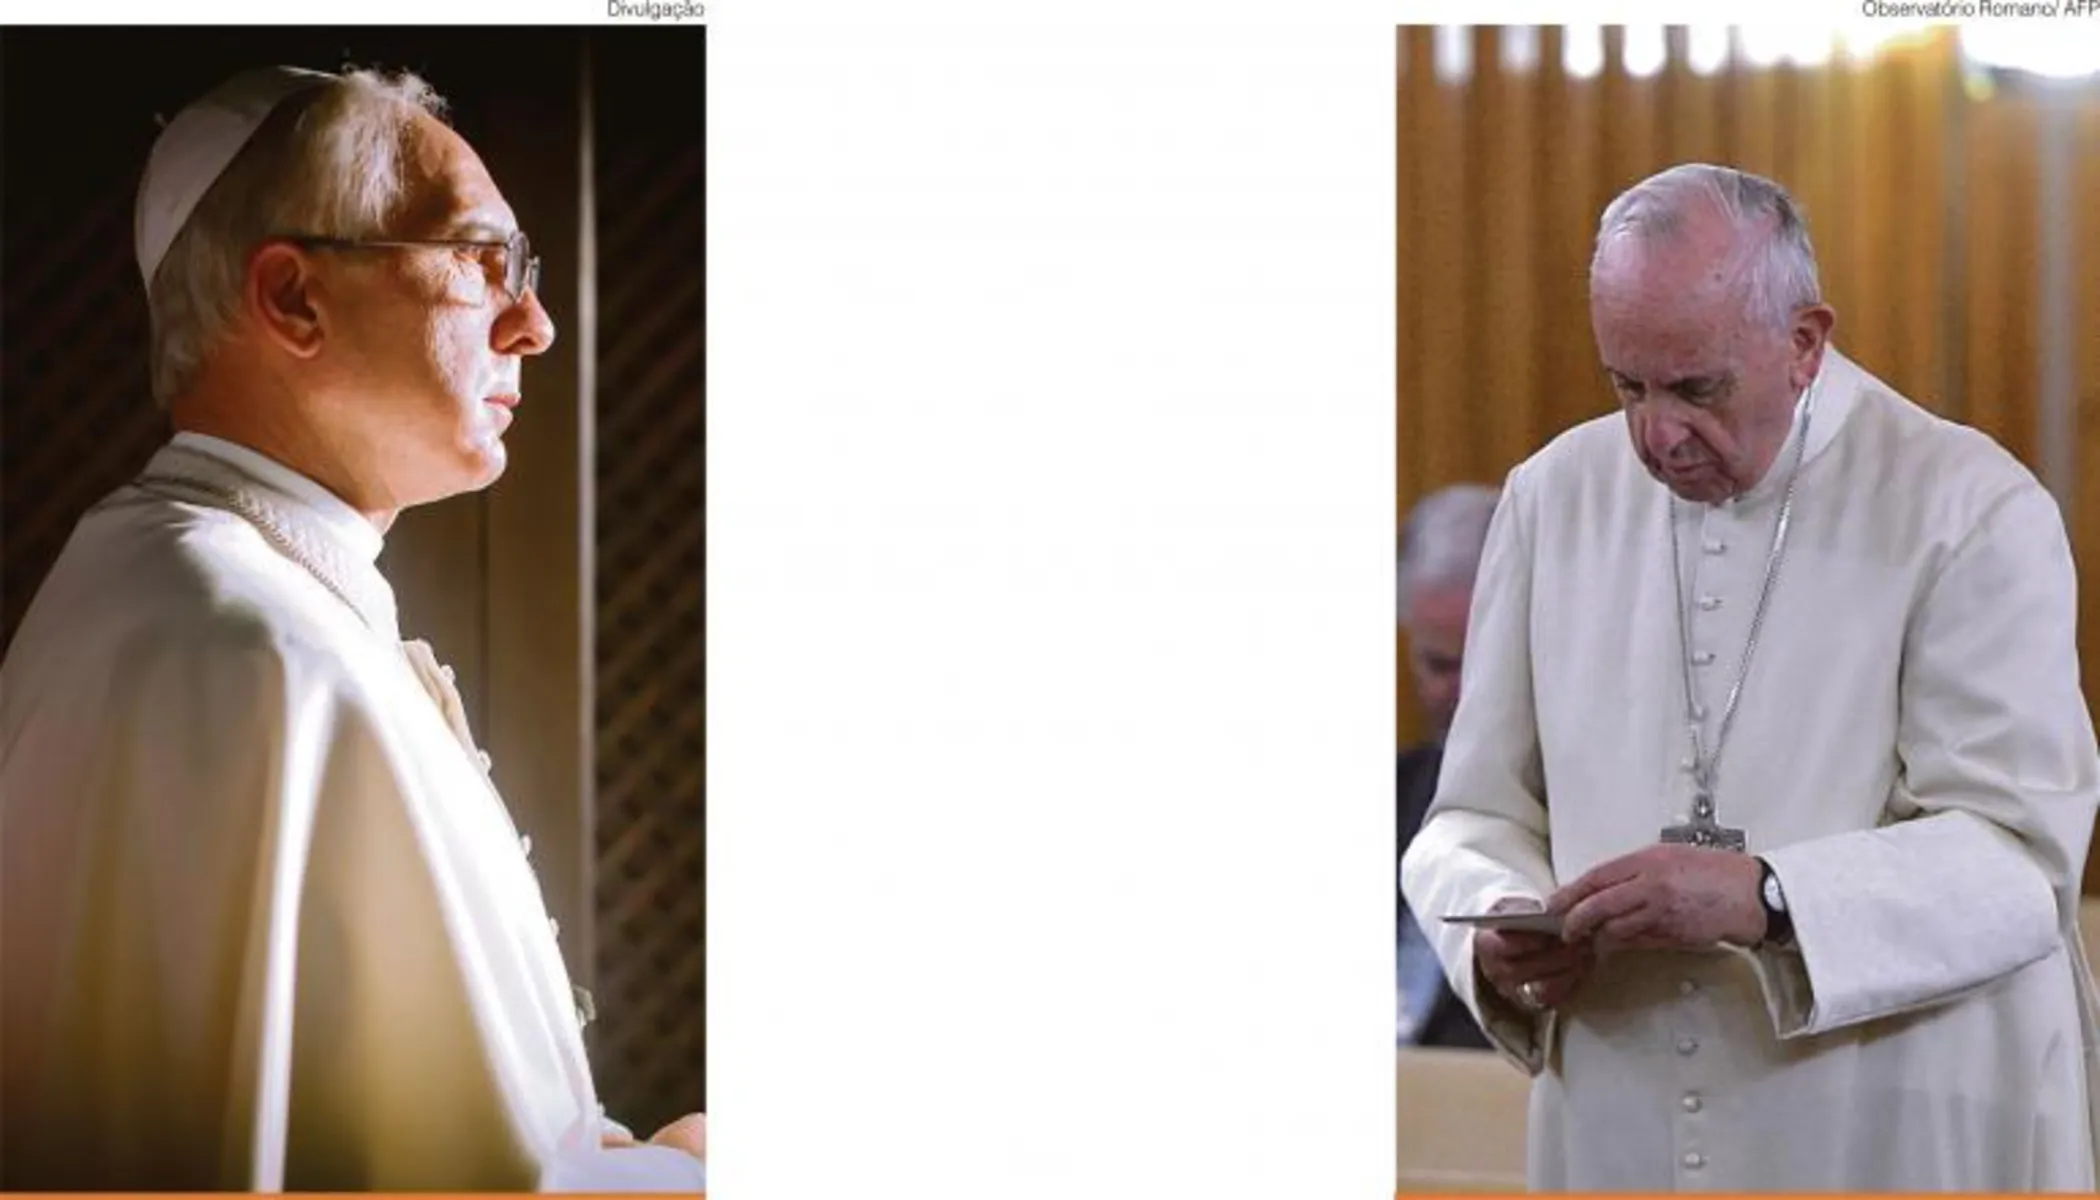 O ator Darío Grandinetti (à esquerda)interpreta o Papa Francisco com a tranquilidade e o humor característicos do pontífice